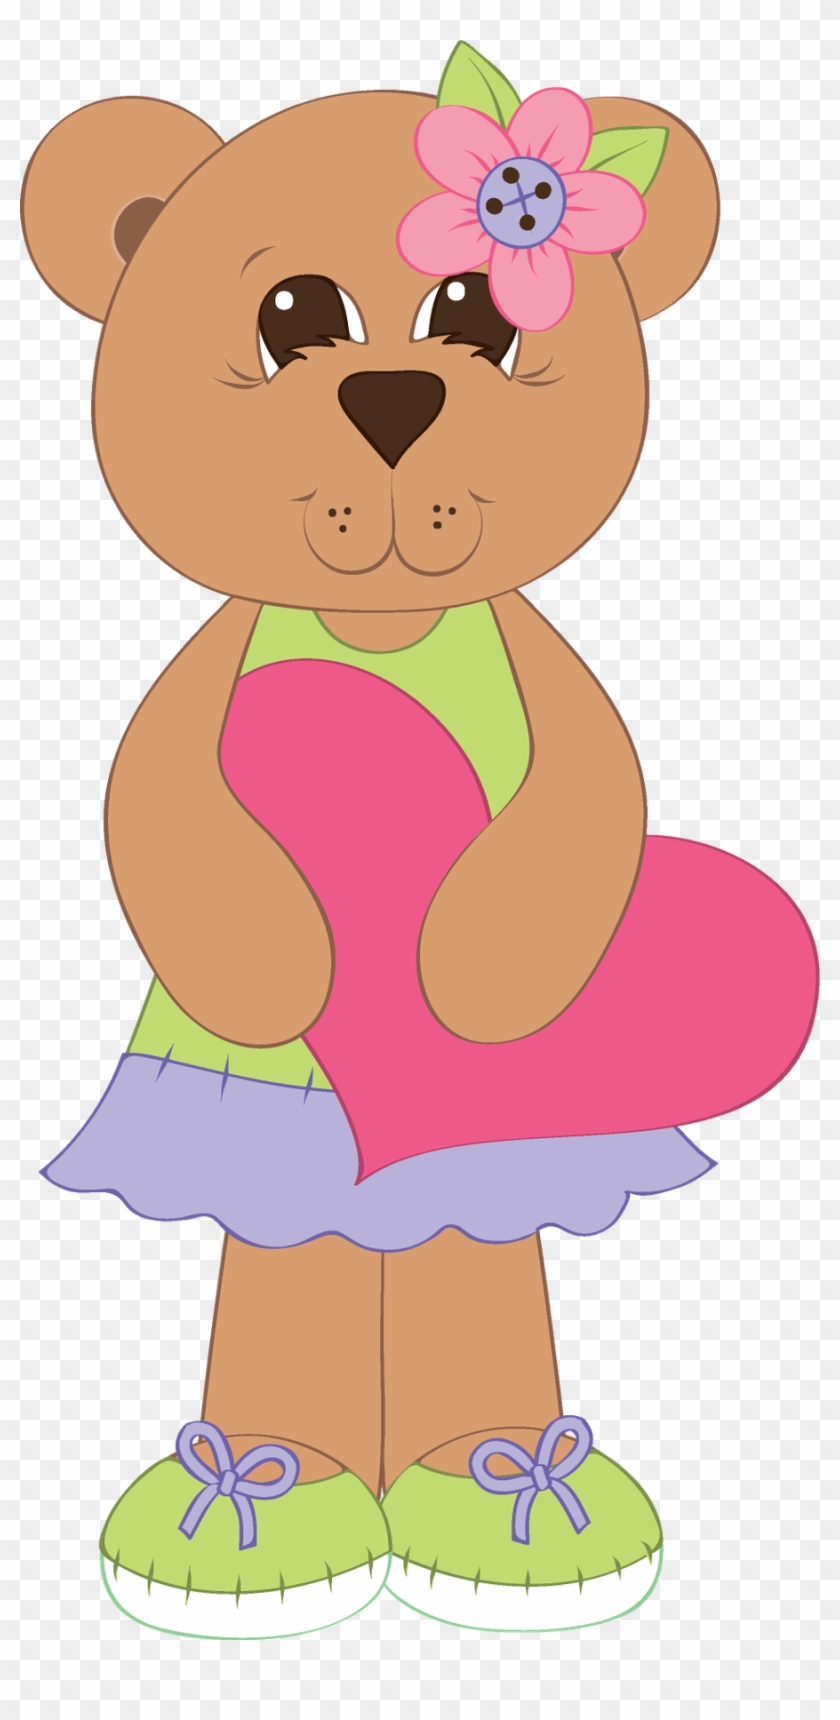 Bear In Green Dress & Shoes Holding A Pink Heart - Teddy Bear #1200989